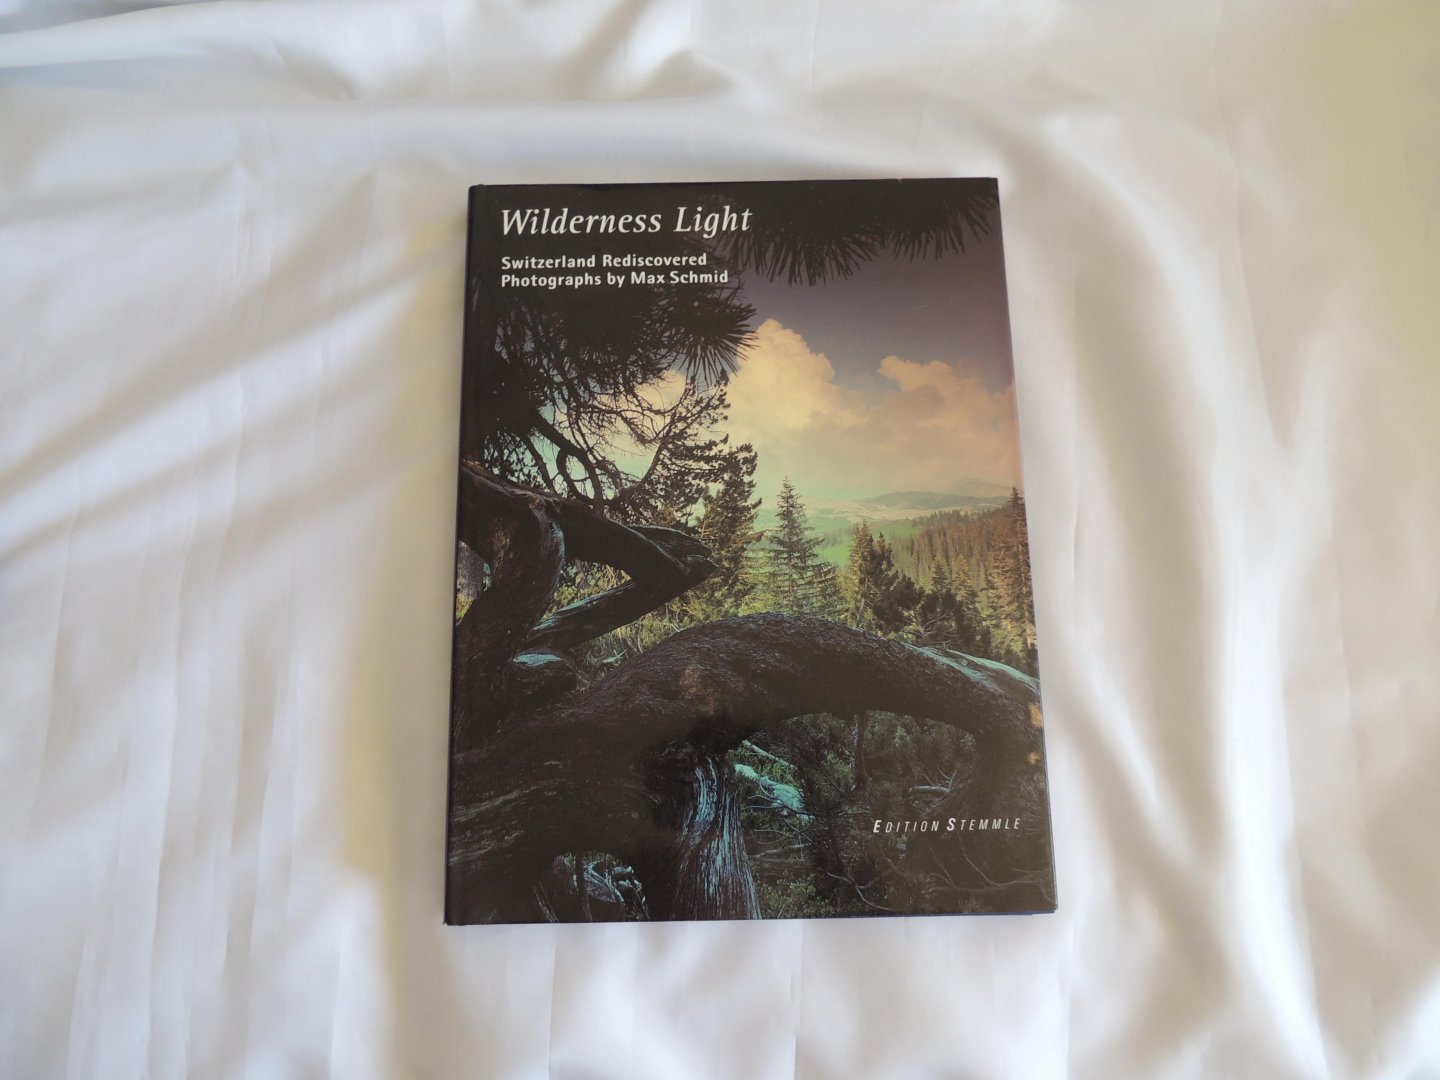 Frauchiger, Urs; Illustrator : Schmid, Max - Wilderness Light Switzerland Rediscovered